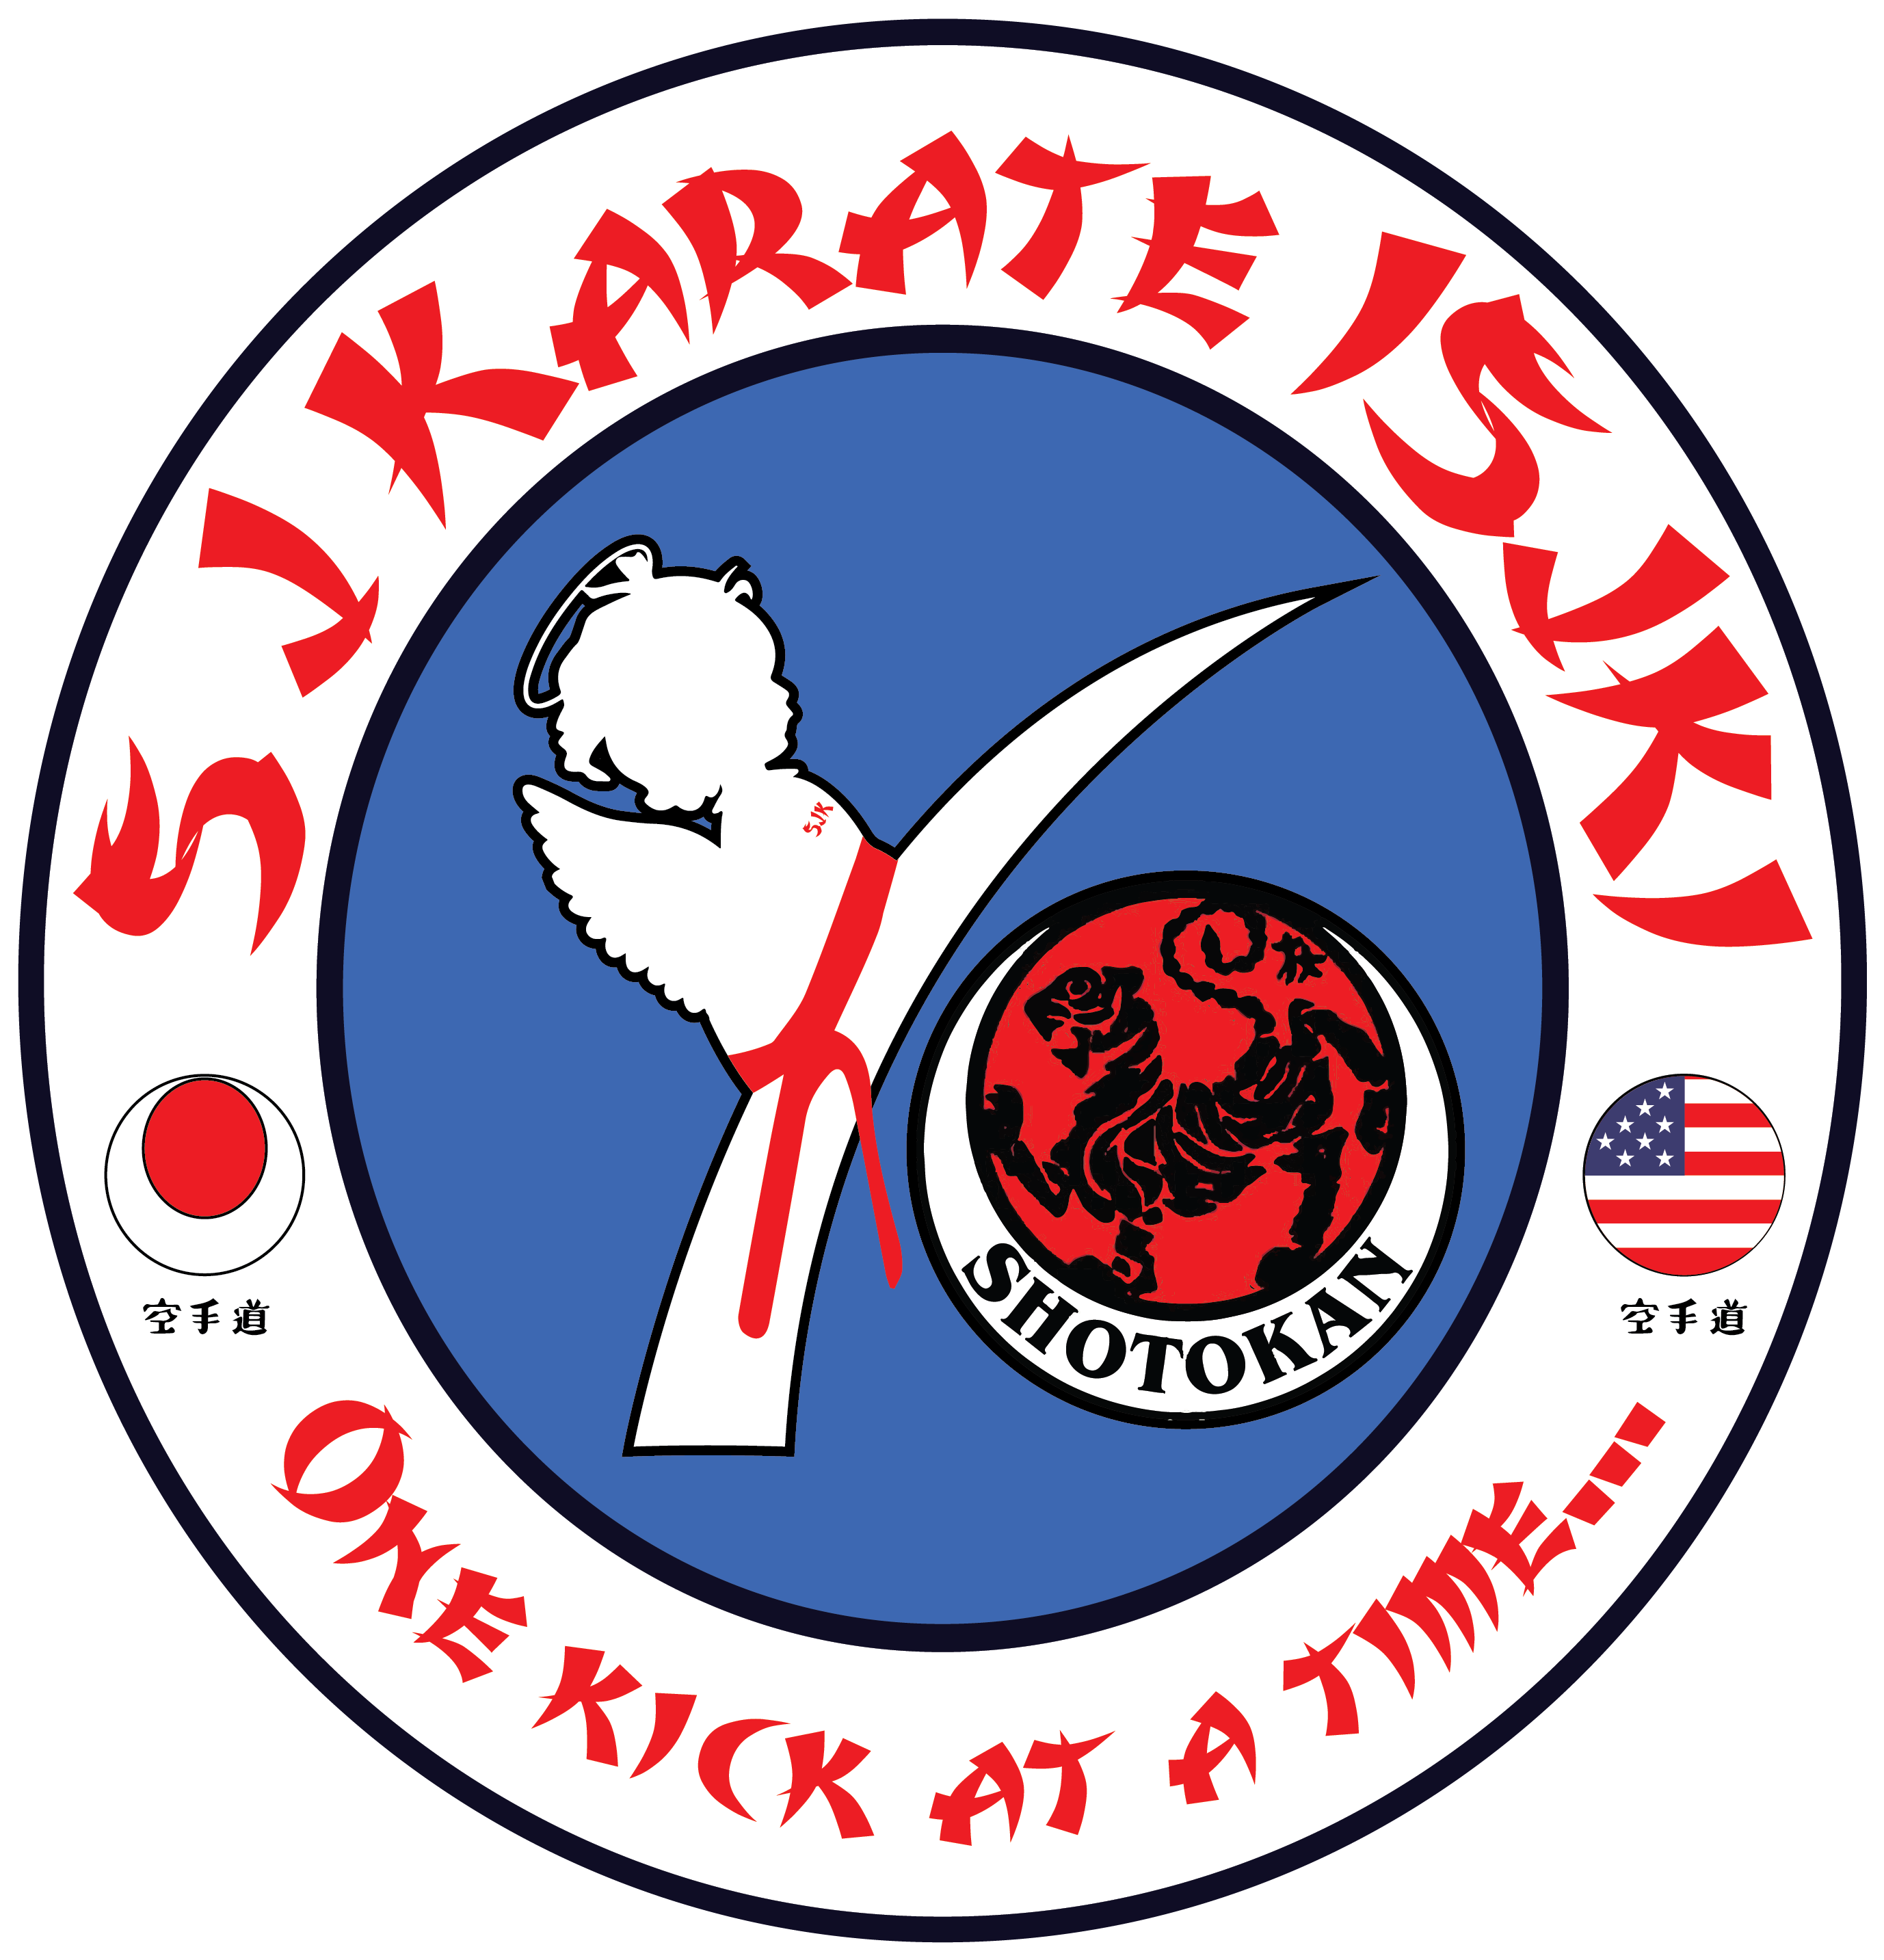 Seleny Joanne Karate (SJK), One Kick At A Time…